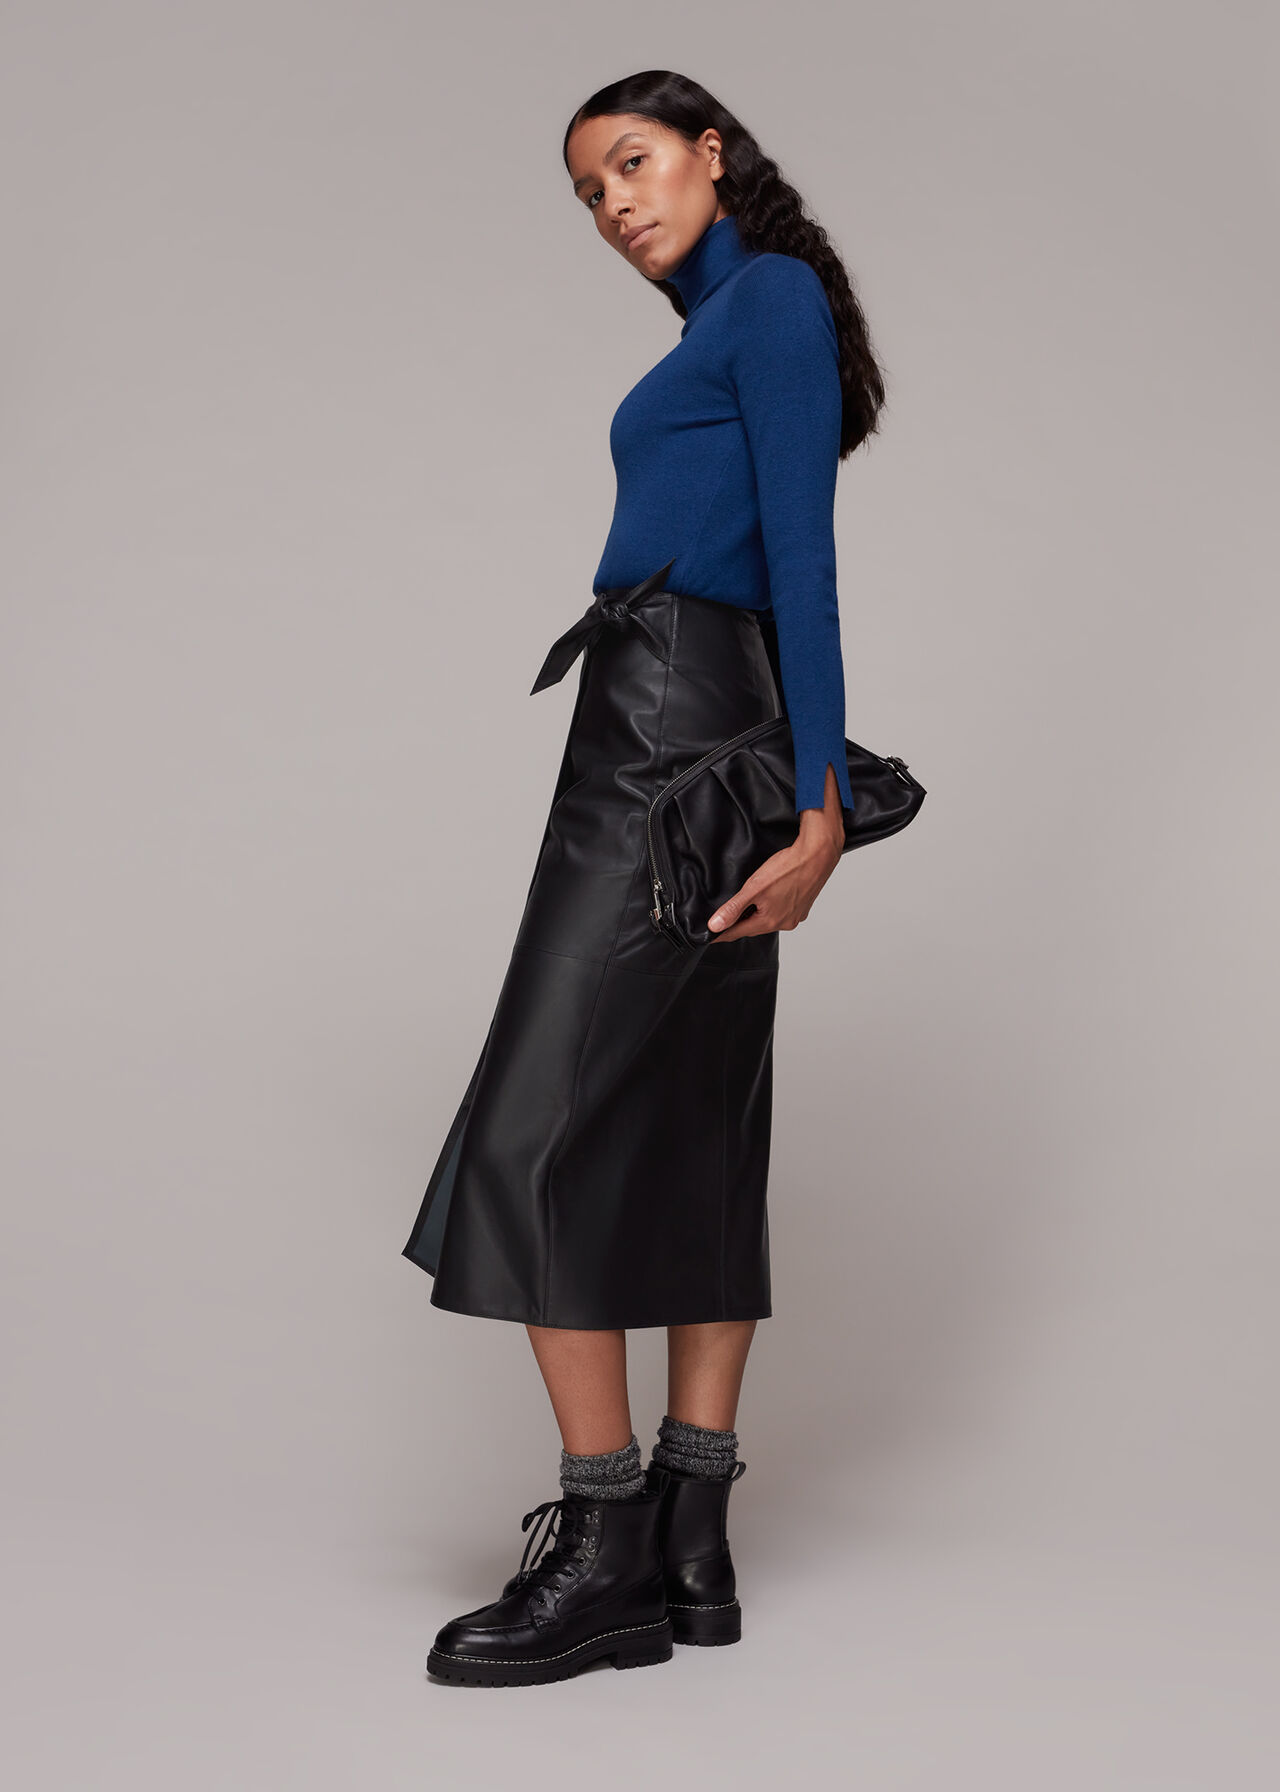 Black Tie Side Leather Skirt | WHISTLES